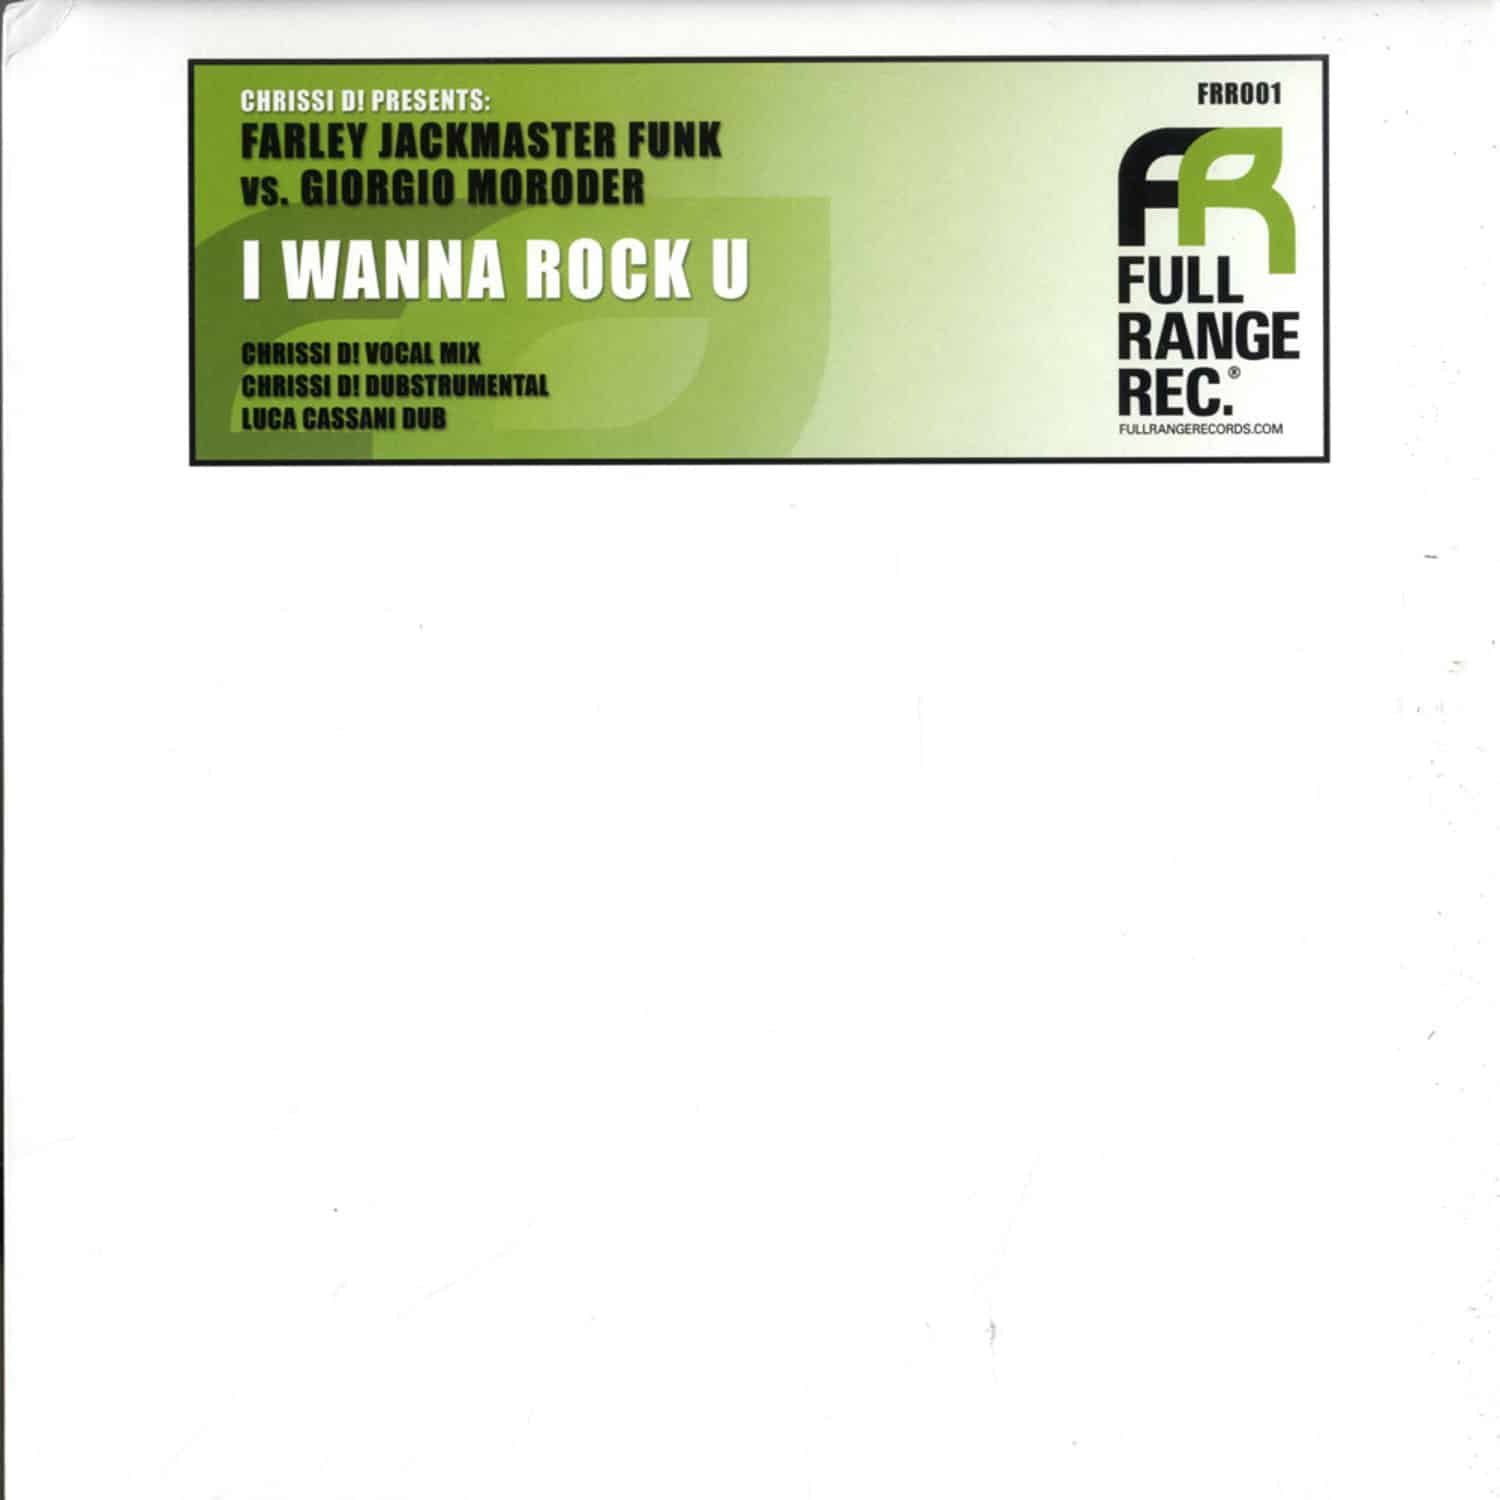 Farley Jackmaster Funk vs. Giorgio Moroder - I WANNA ROCK U